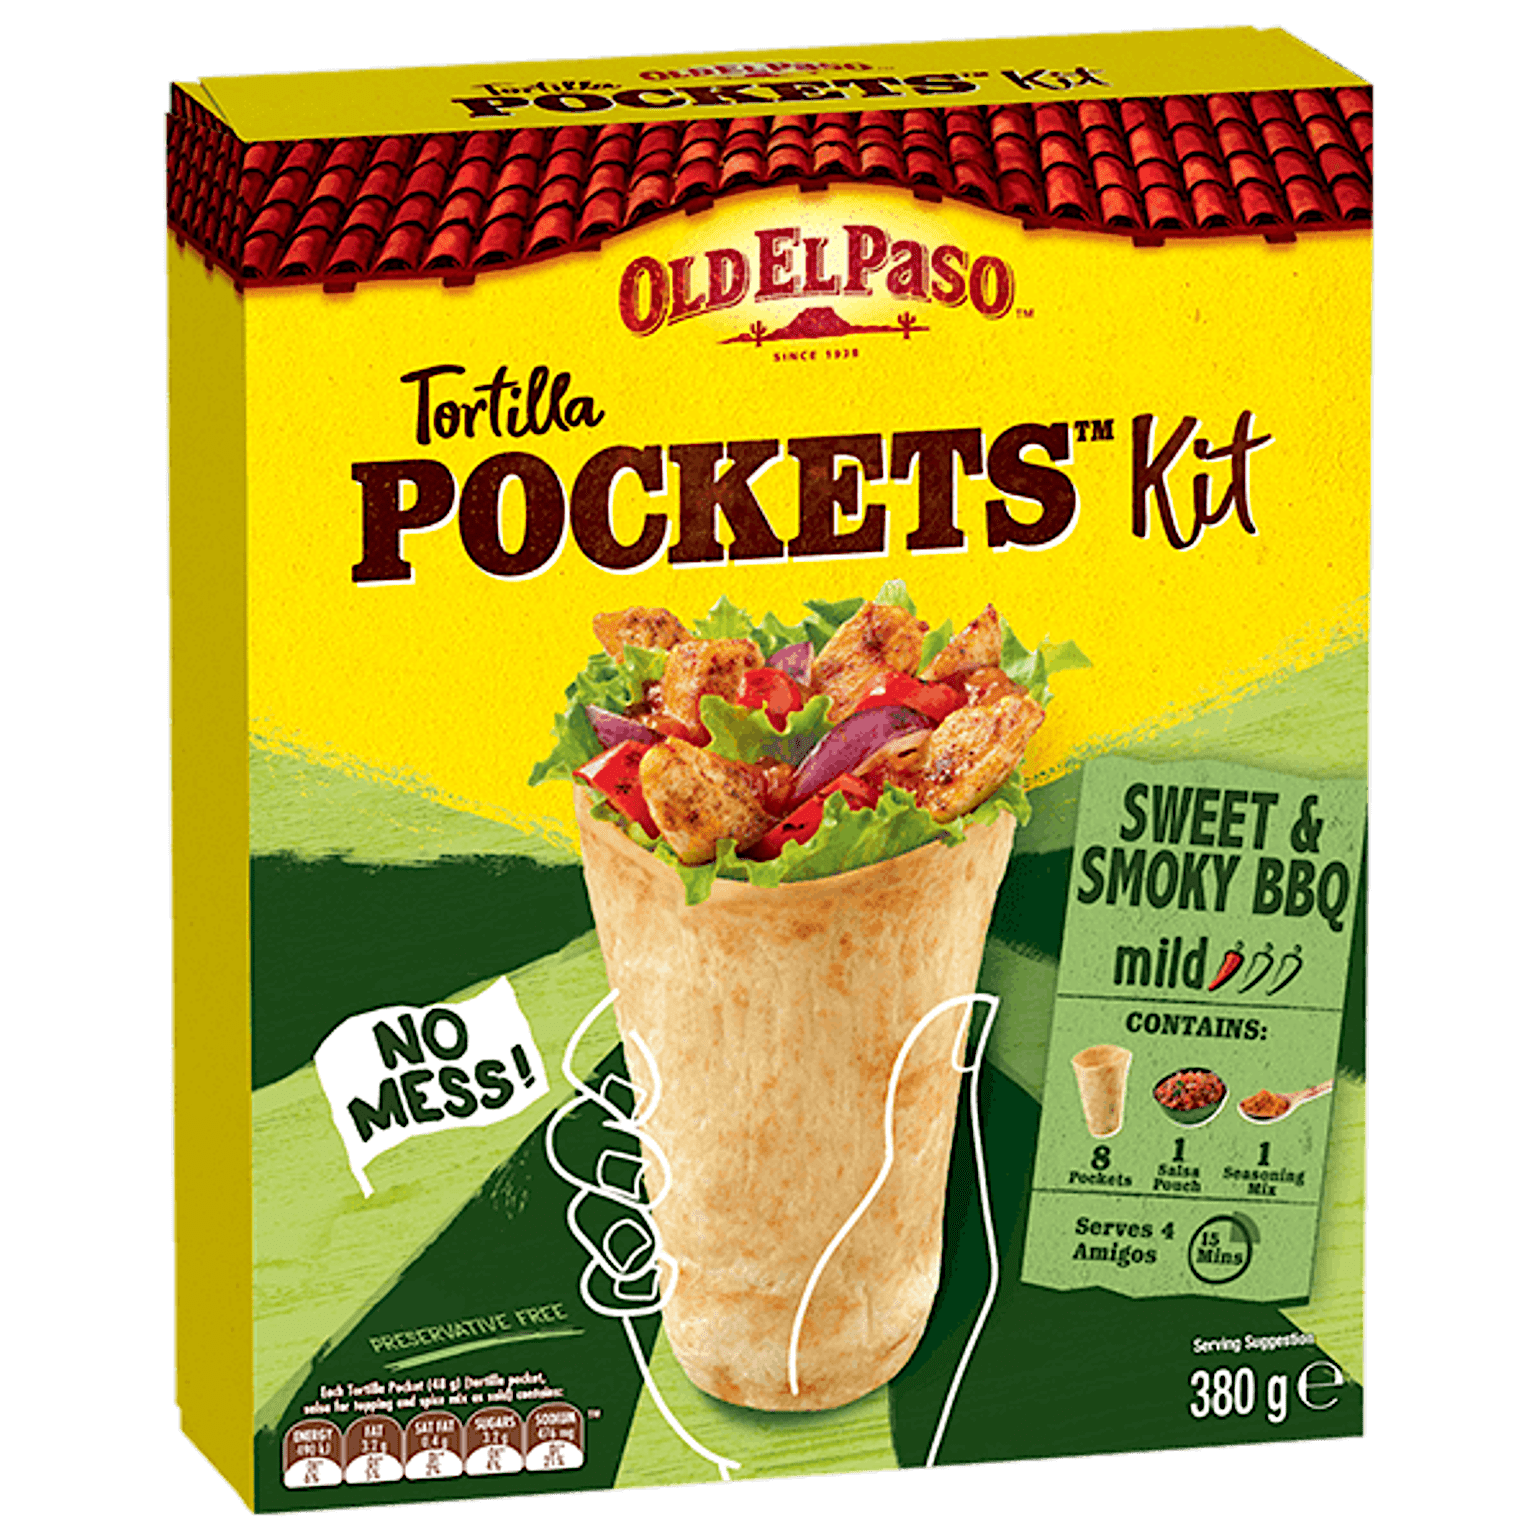 Old El Paso Tortilla Pockets Kit™ Sweet & Smoky BBQ